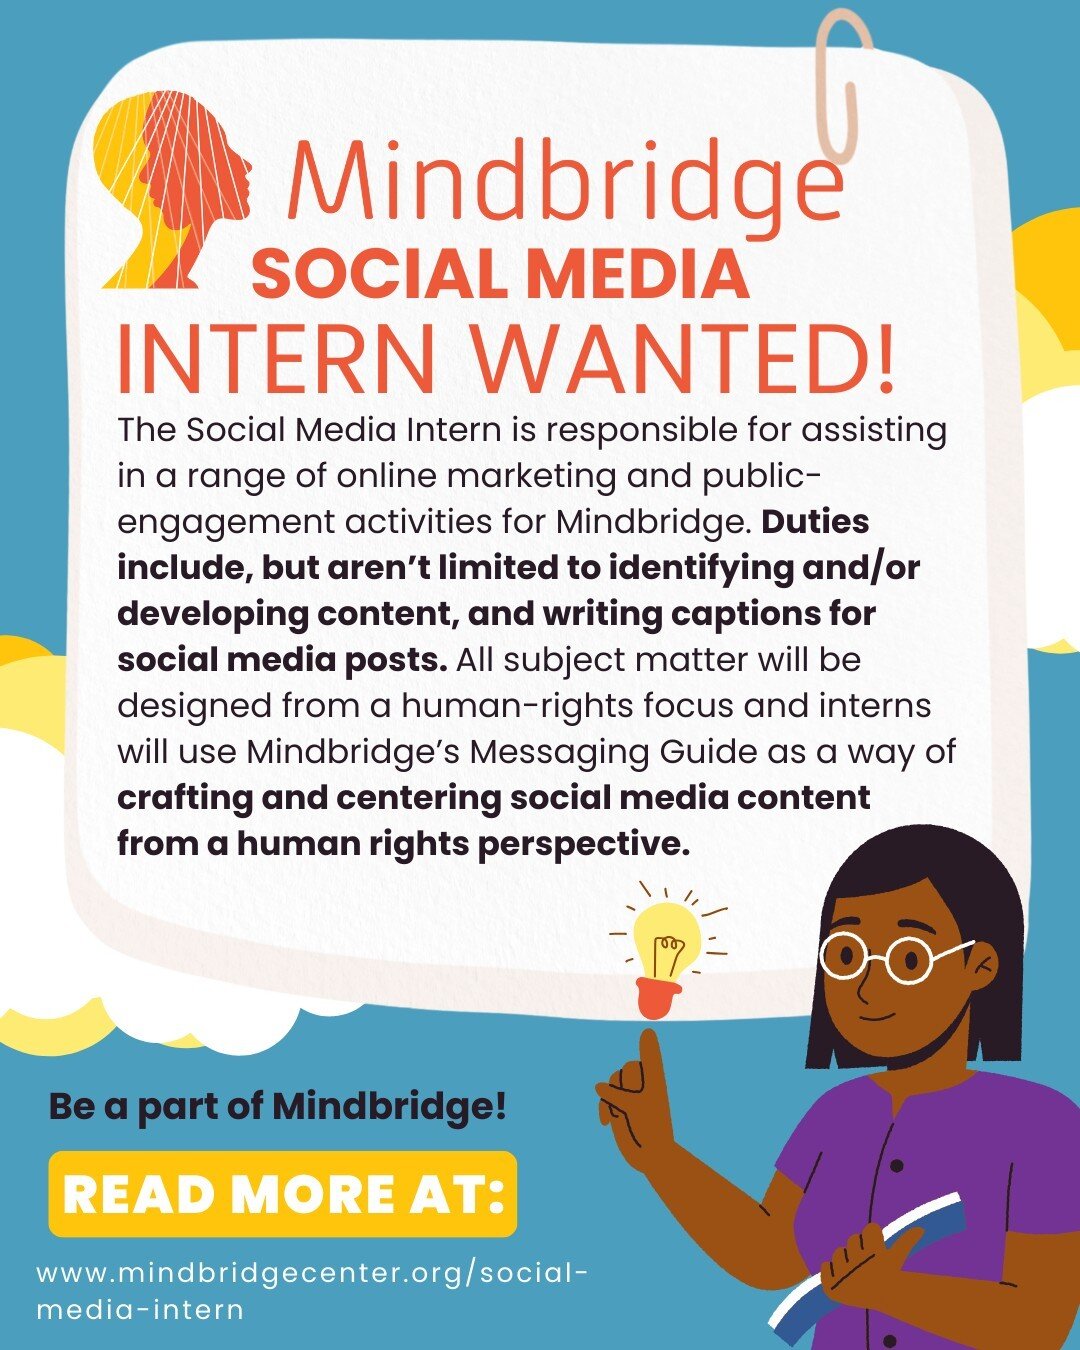 Attention! Mindbridge is looking for a Social Media Intern! Learn more at: https://www.mindbridgecenter.org/social-media-intern